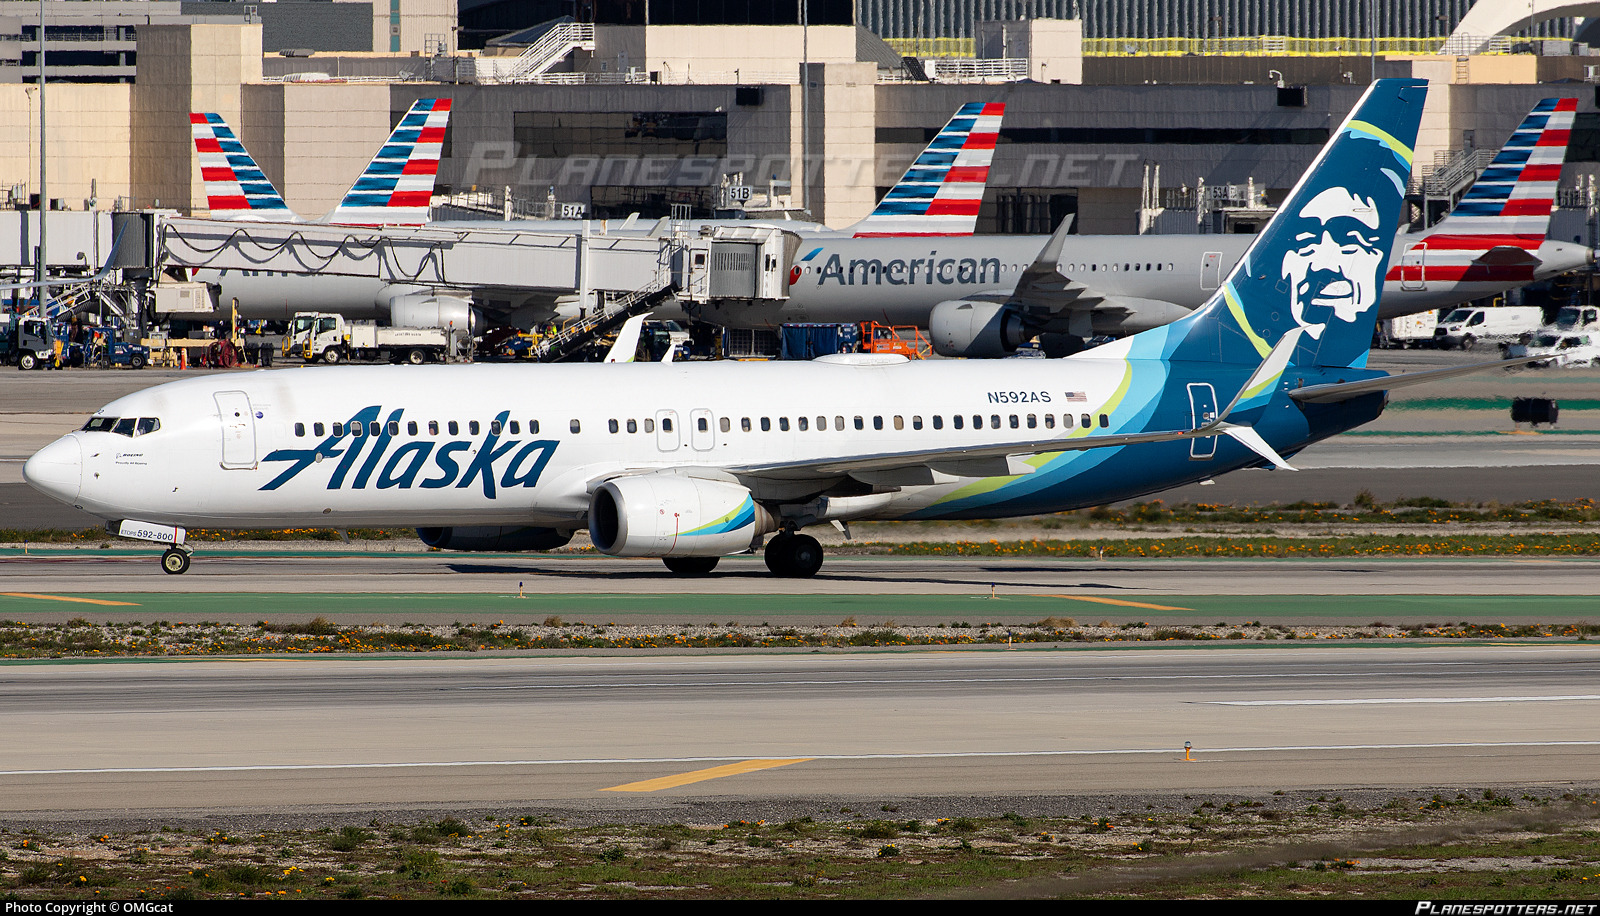 financialounge -  Airbus Alaska Airlines Boeing borsa mercati